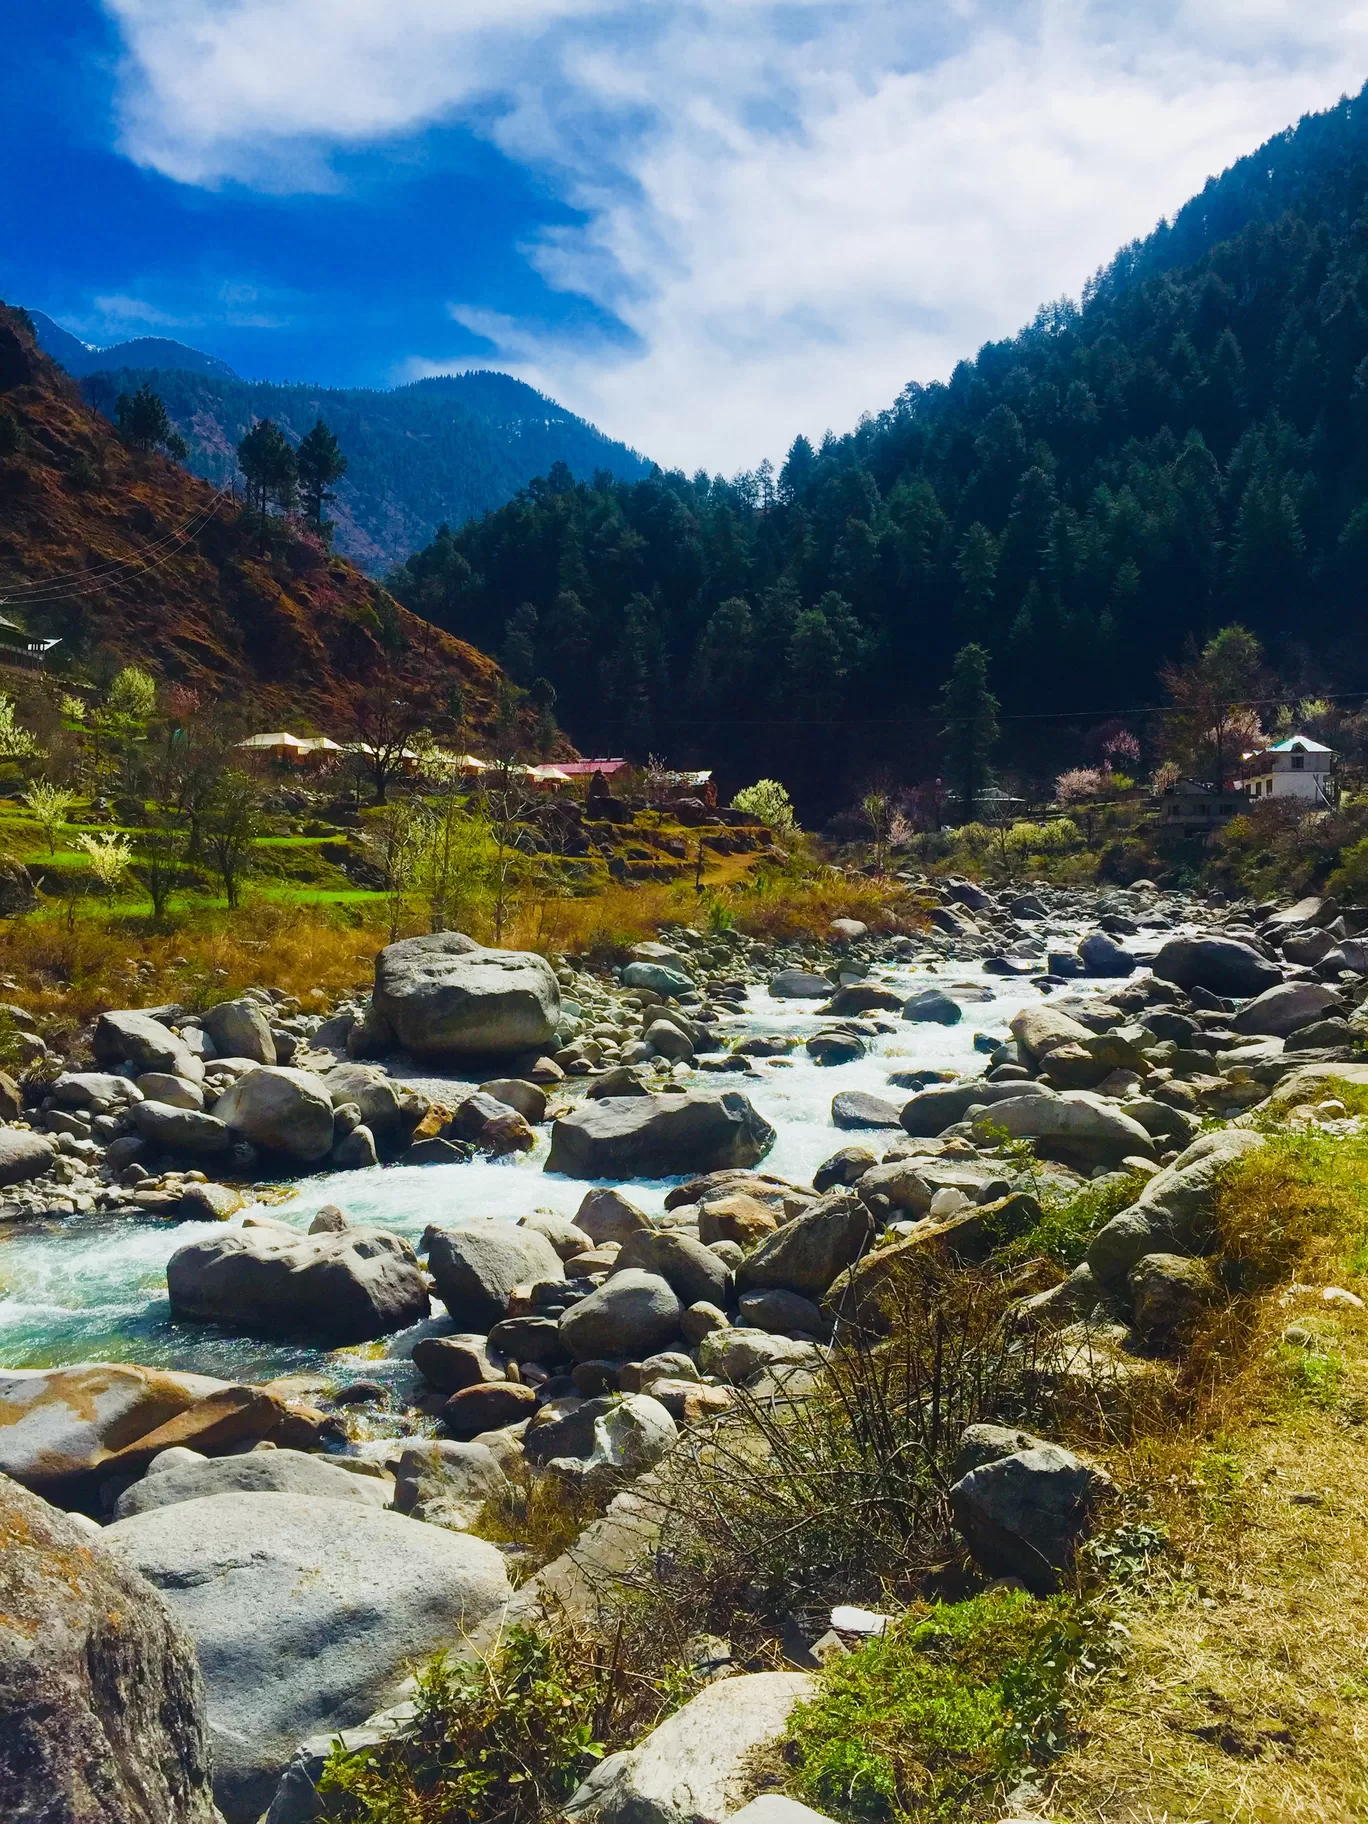 Photo of Tirthan Valley By deepali sukhija